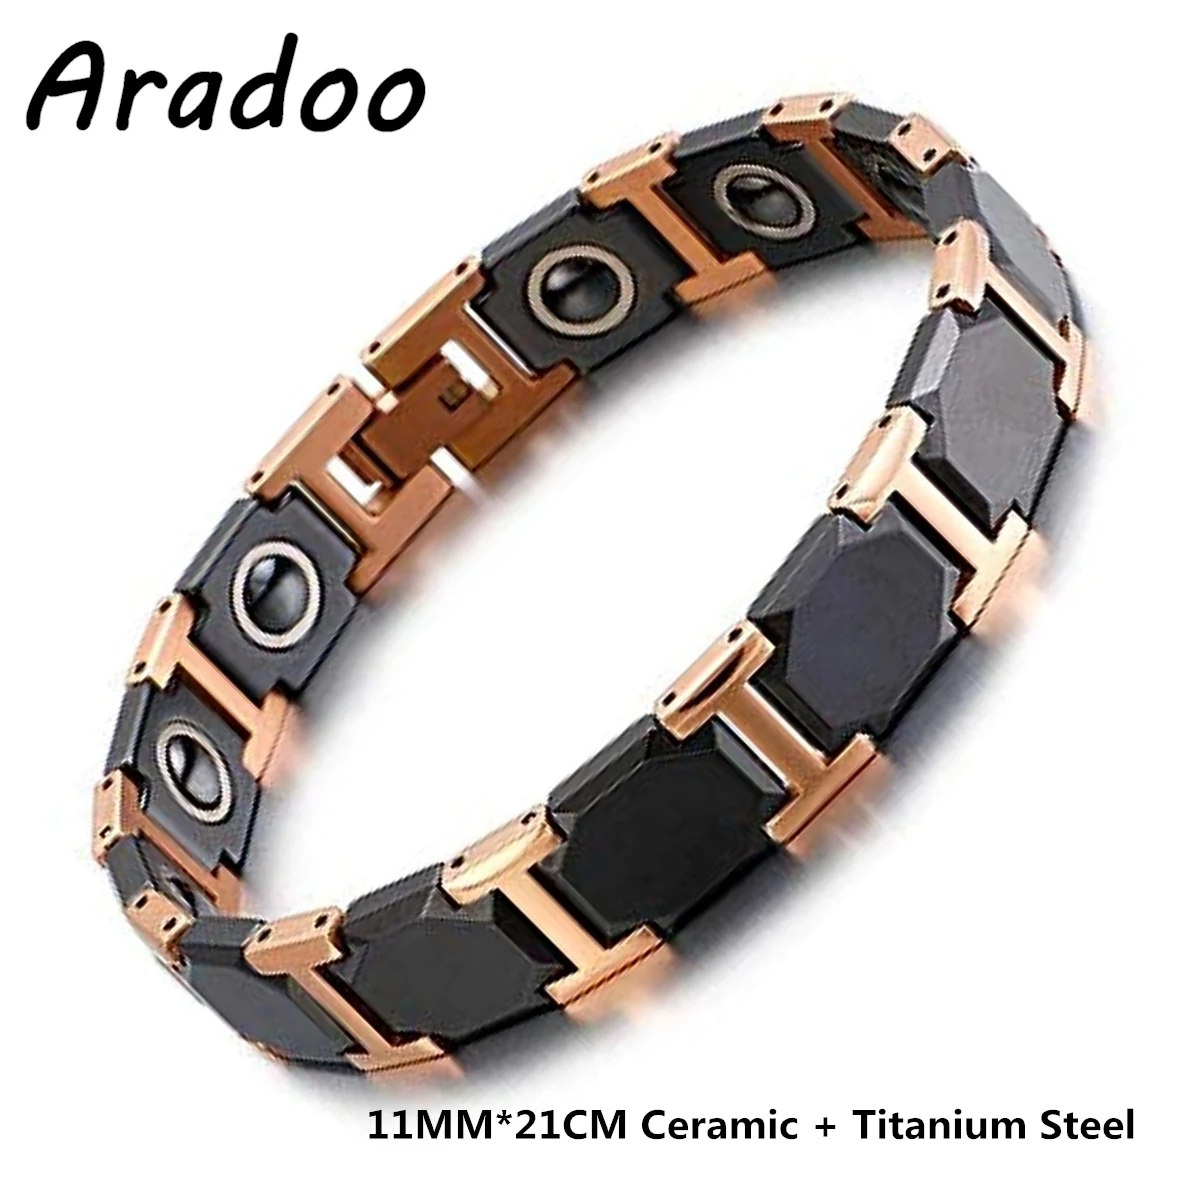 

Aradoo Ceramic Titanium Steel Negative Ion Anti-Radiation Bracelet Magnetic Hematite Fat Burning Weight Loss Bracelet